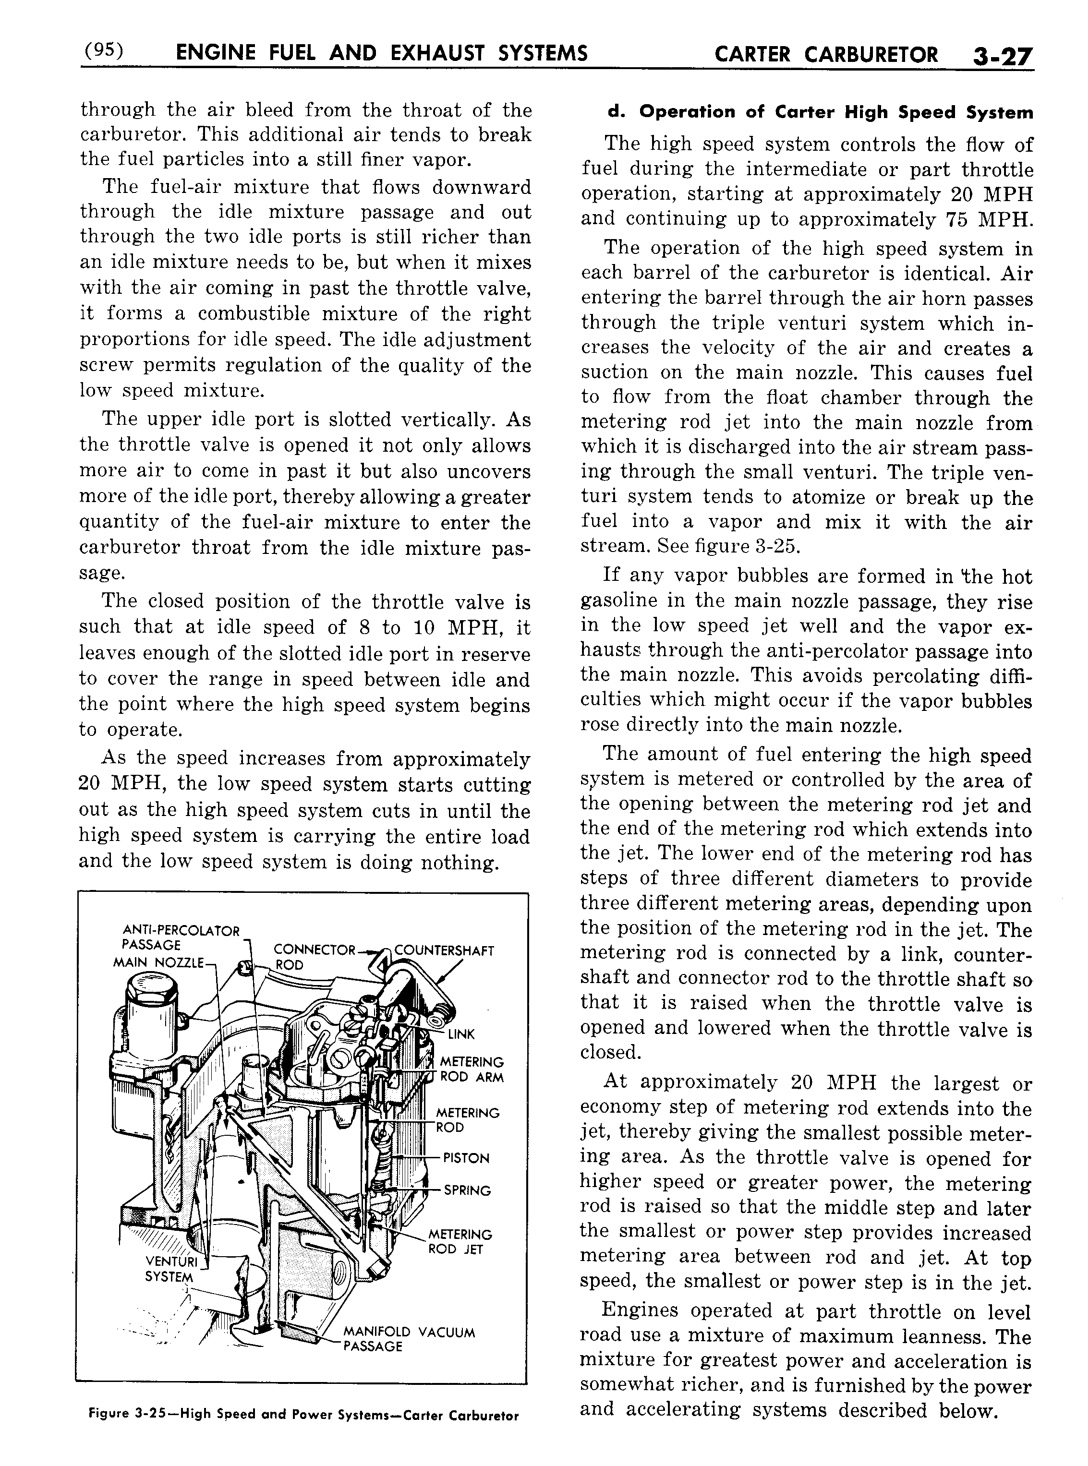 n_04 1951 Buick Shop Manual - Engine Fuel & Exhaust-027-027.jpg